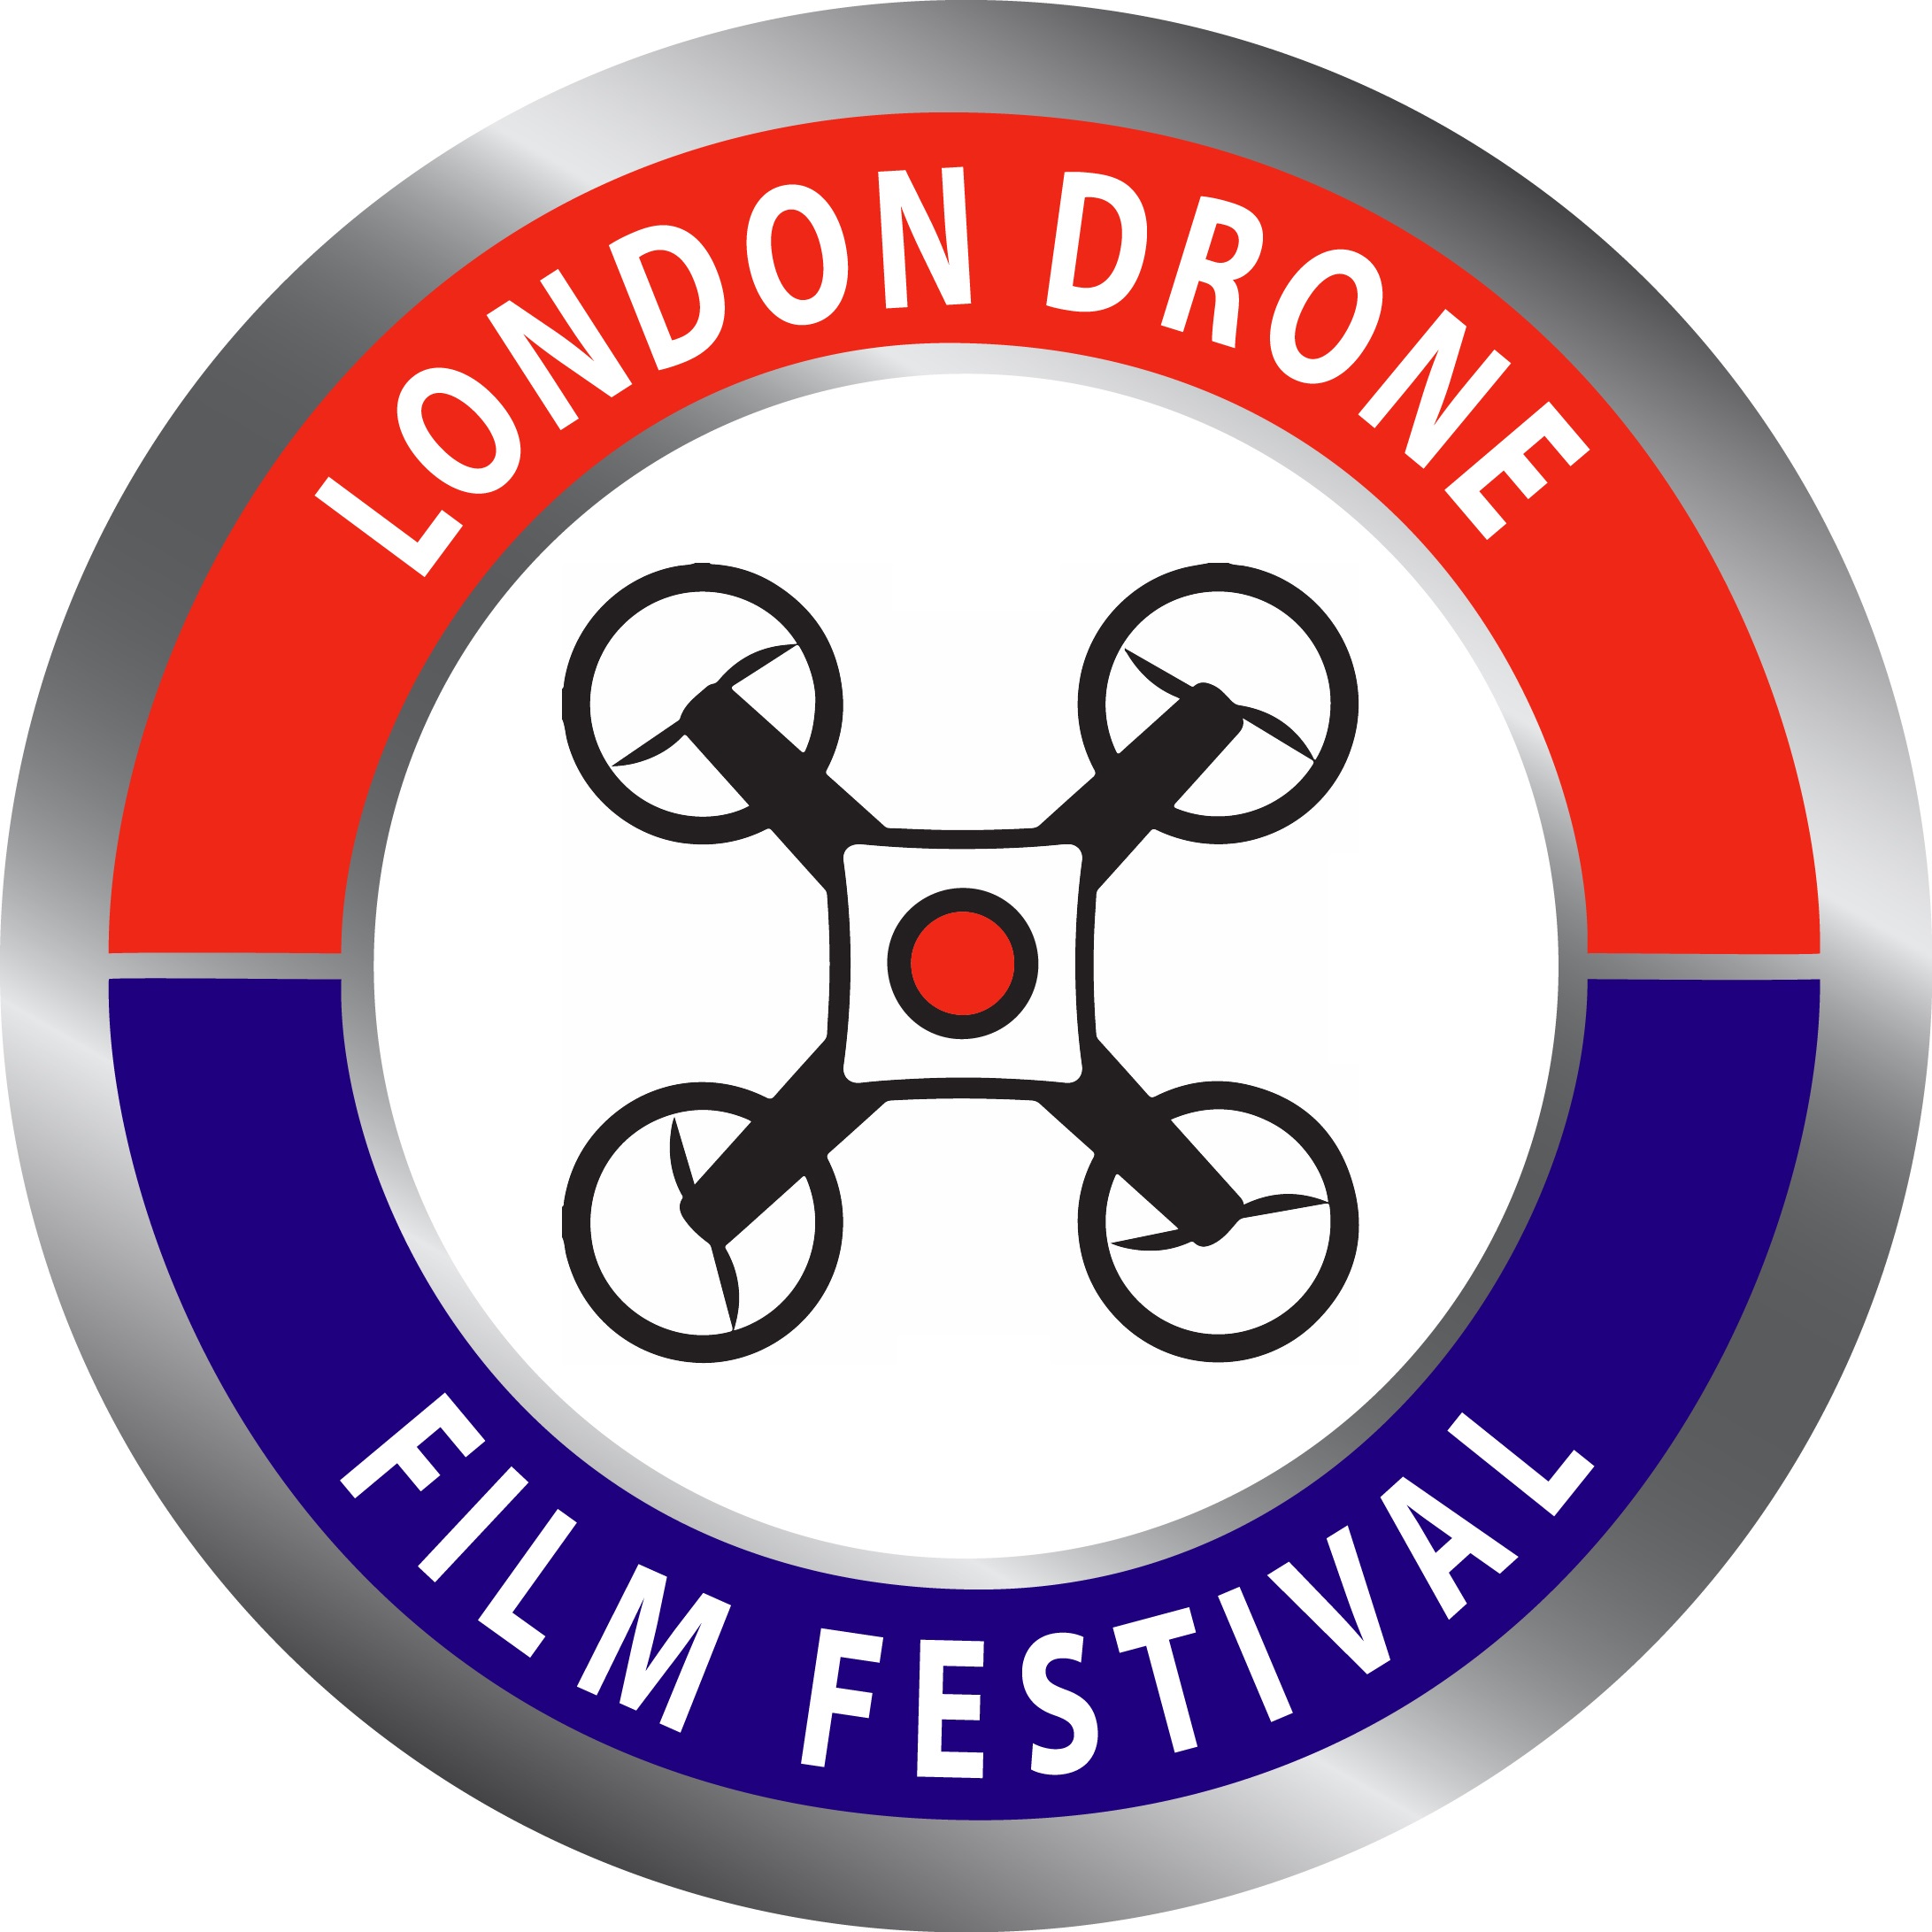 London Drone Film Festival